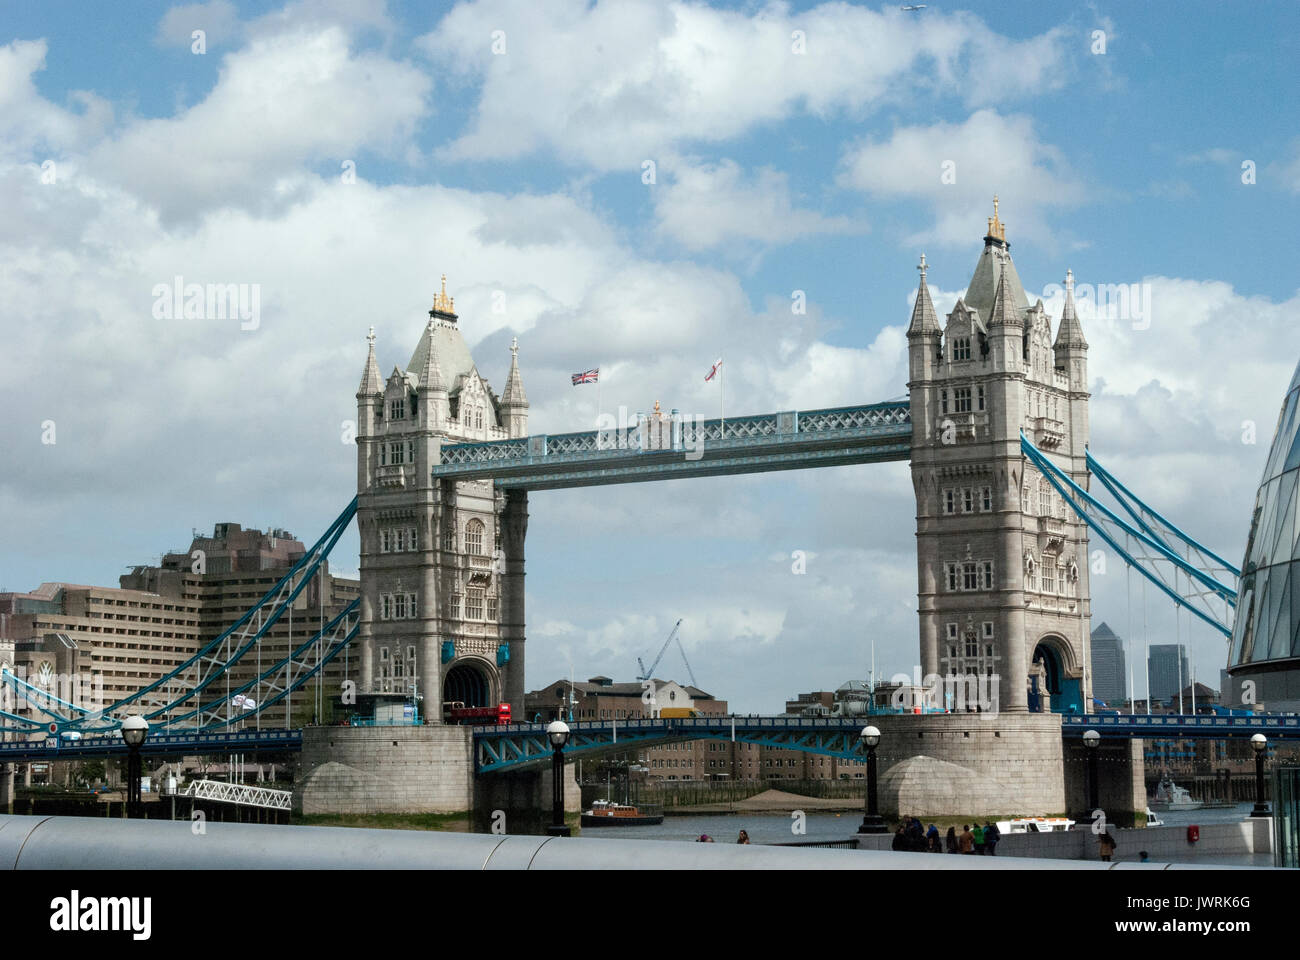 London England,Tower Bridge, Famous Landmark, Tourist Attraction, Suspension Bridge, Tower Bridge Crosses the River Thames, City Hall Mayor of London Stock Photo